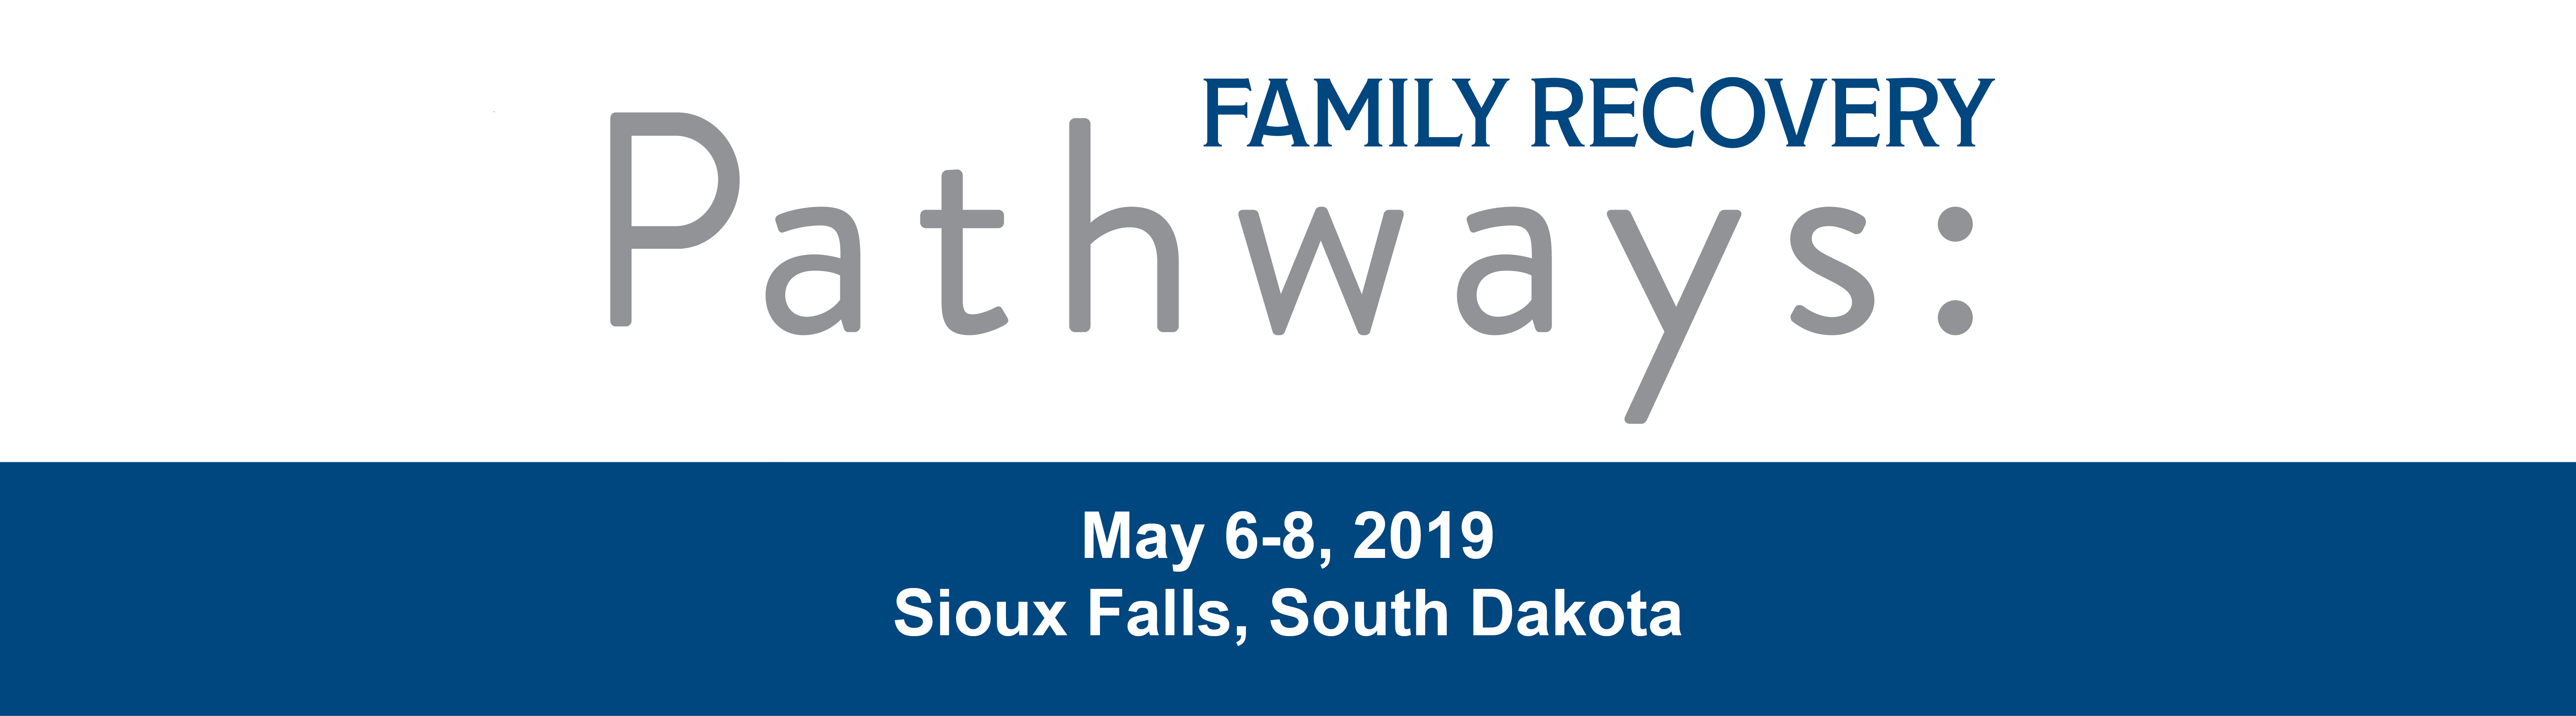 Family Recovery Pathways logo